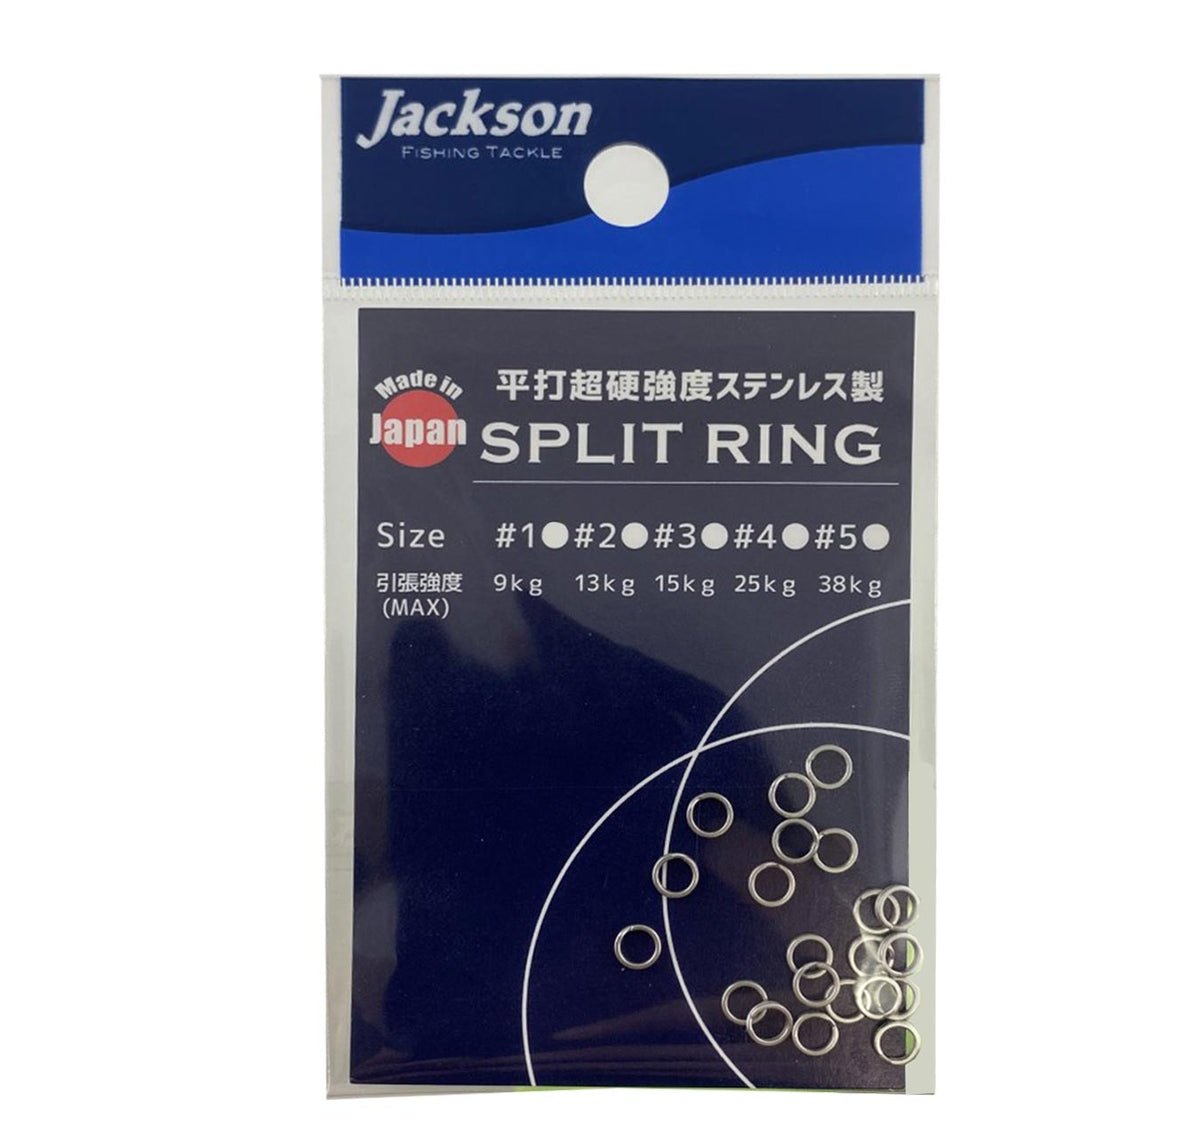 Jackson Split Rings